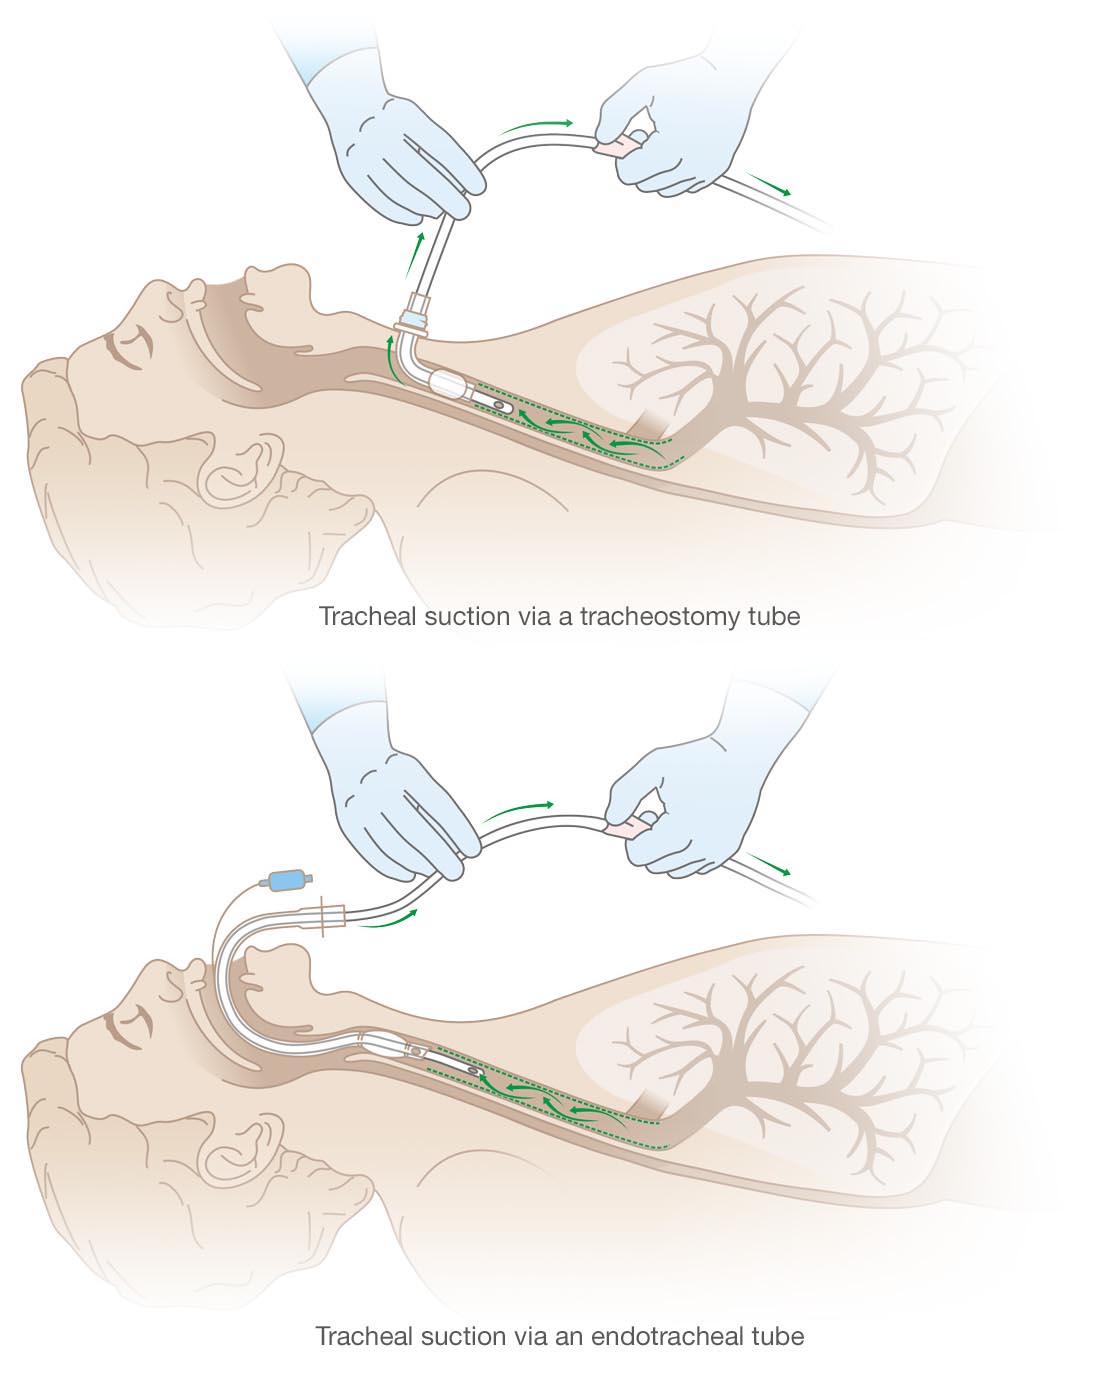 How to suction catheters via a tracheostomy or endotracheal tube